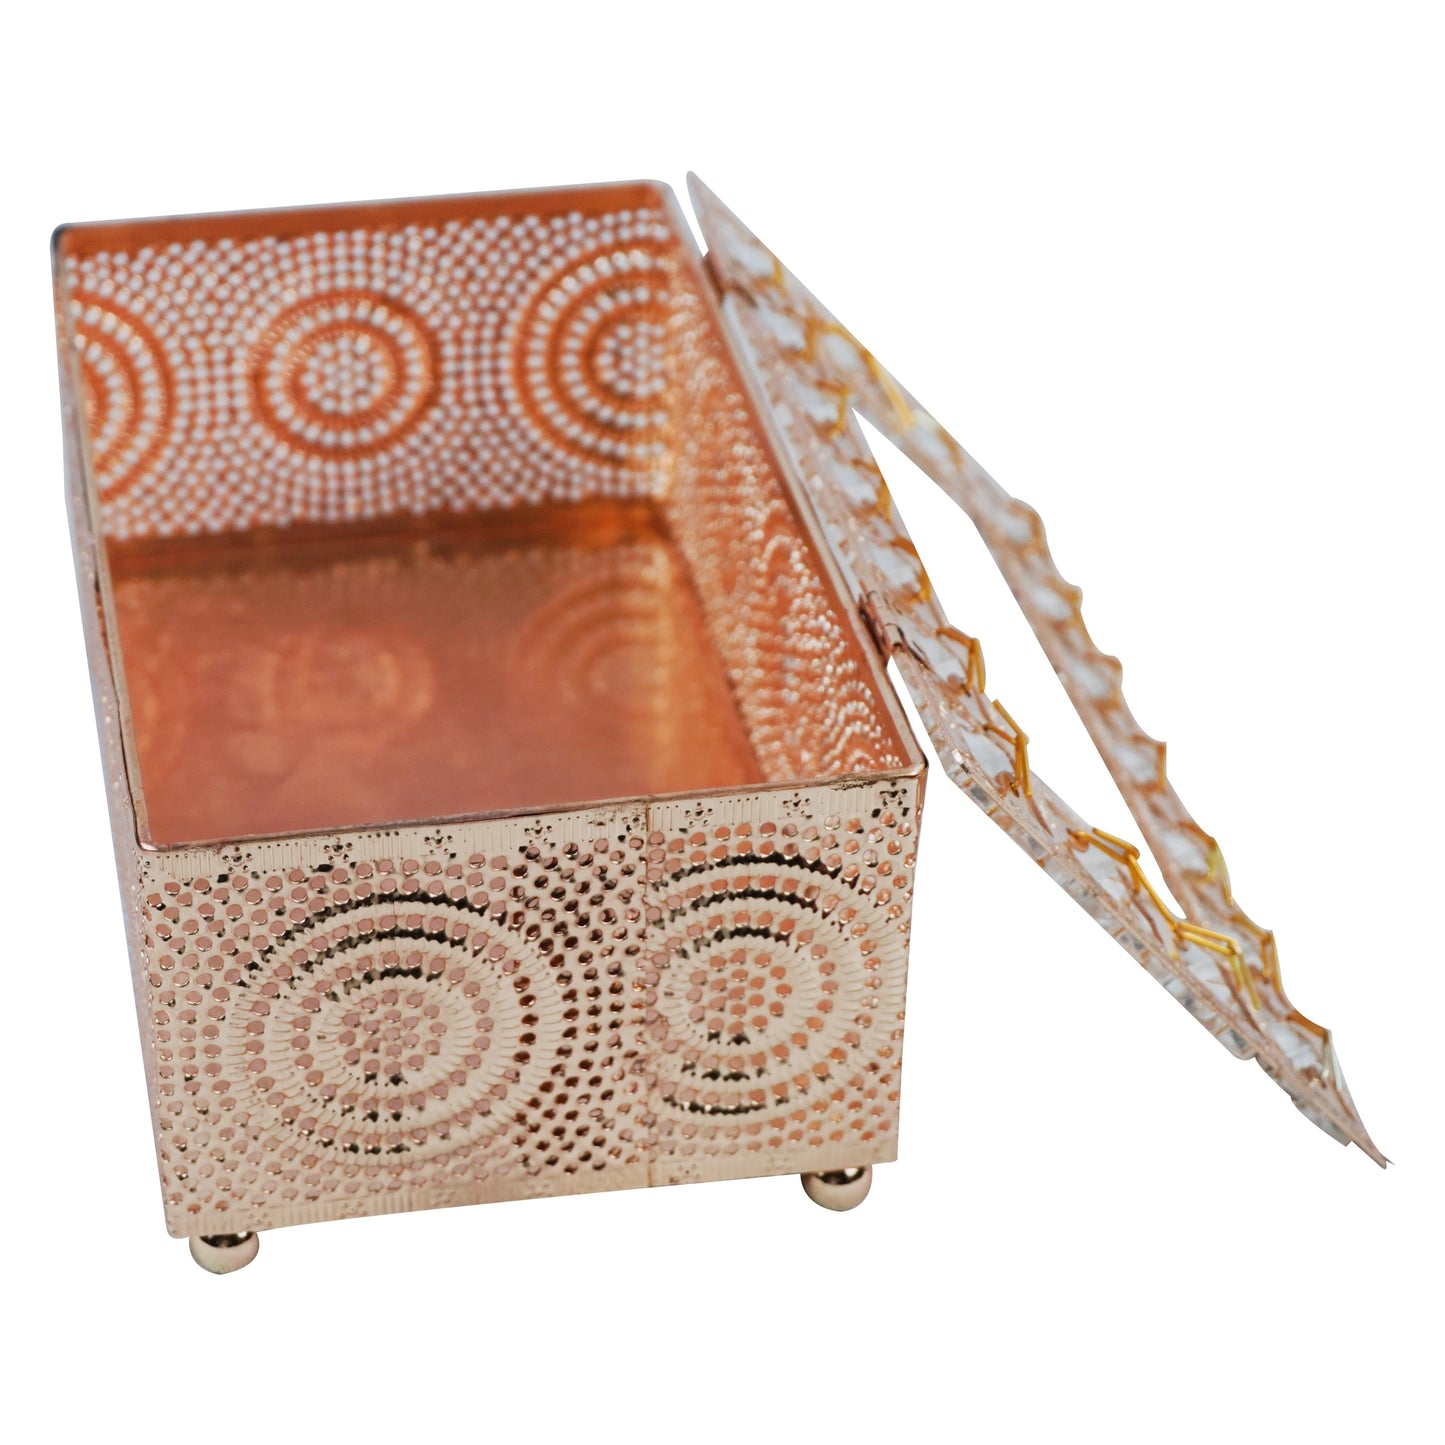 Decorative Rhinestones Crystal & Round Designed Borders Iron Tissue Box Holder Centrepiece